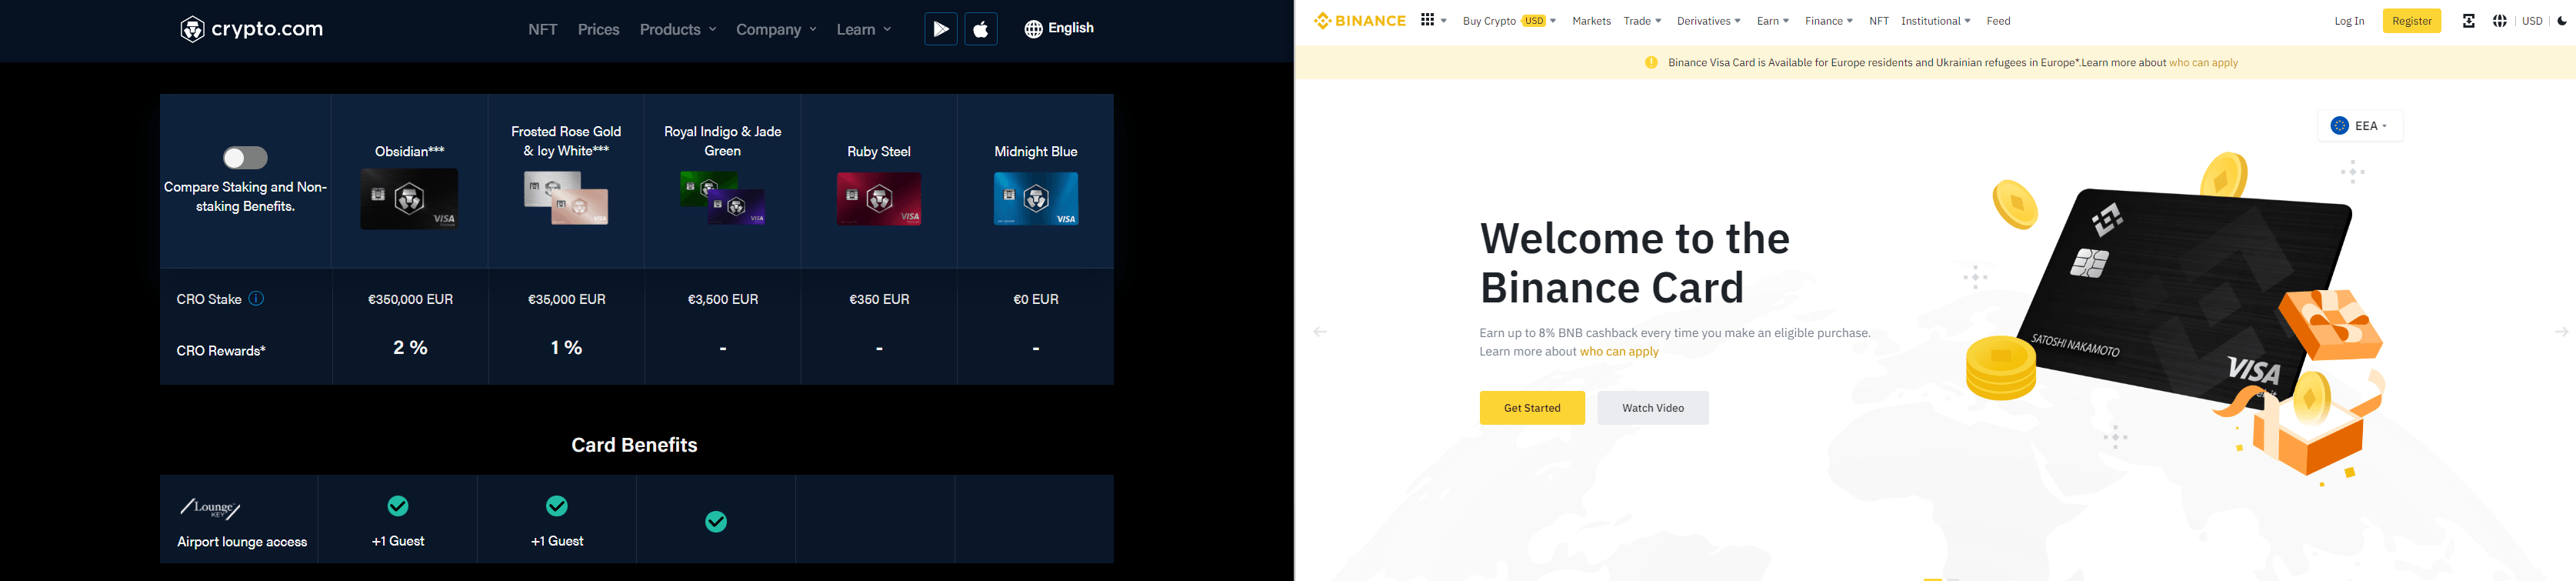 Do Binance or Crypto.com offer international Visa Card payments?